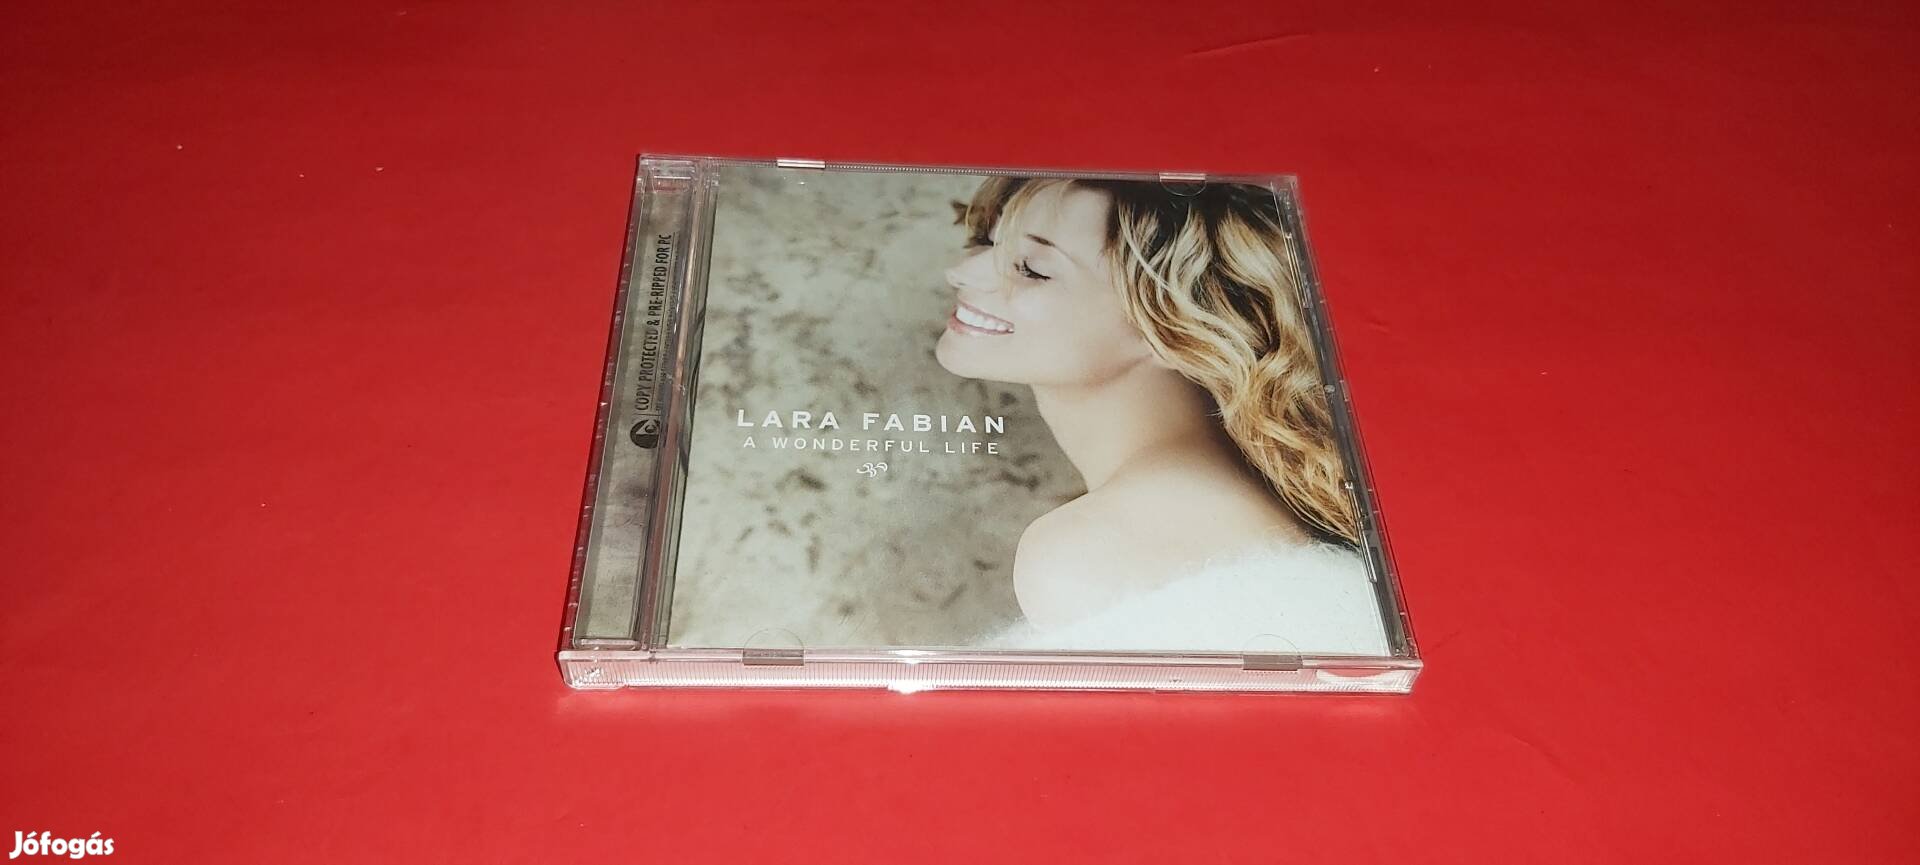 Lara Fabian A wonderful life Cd 2004